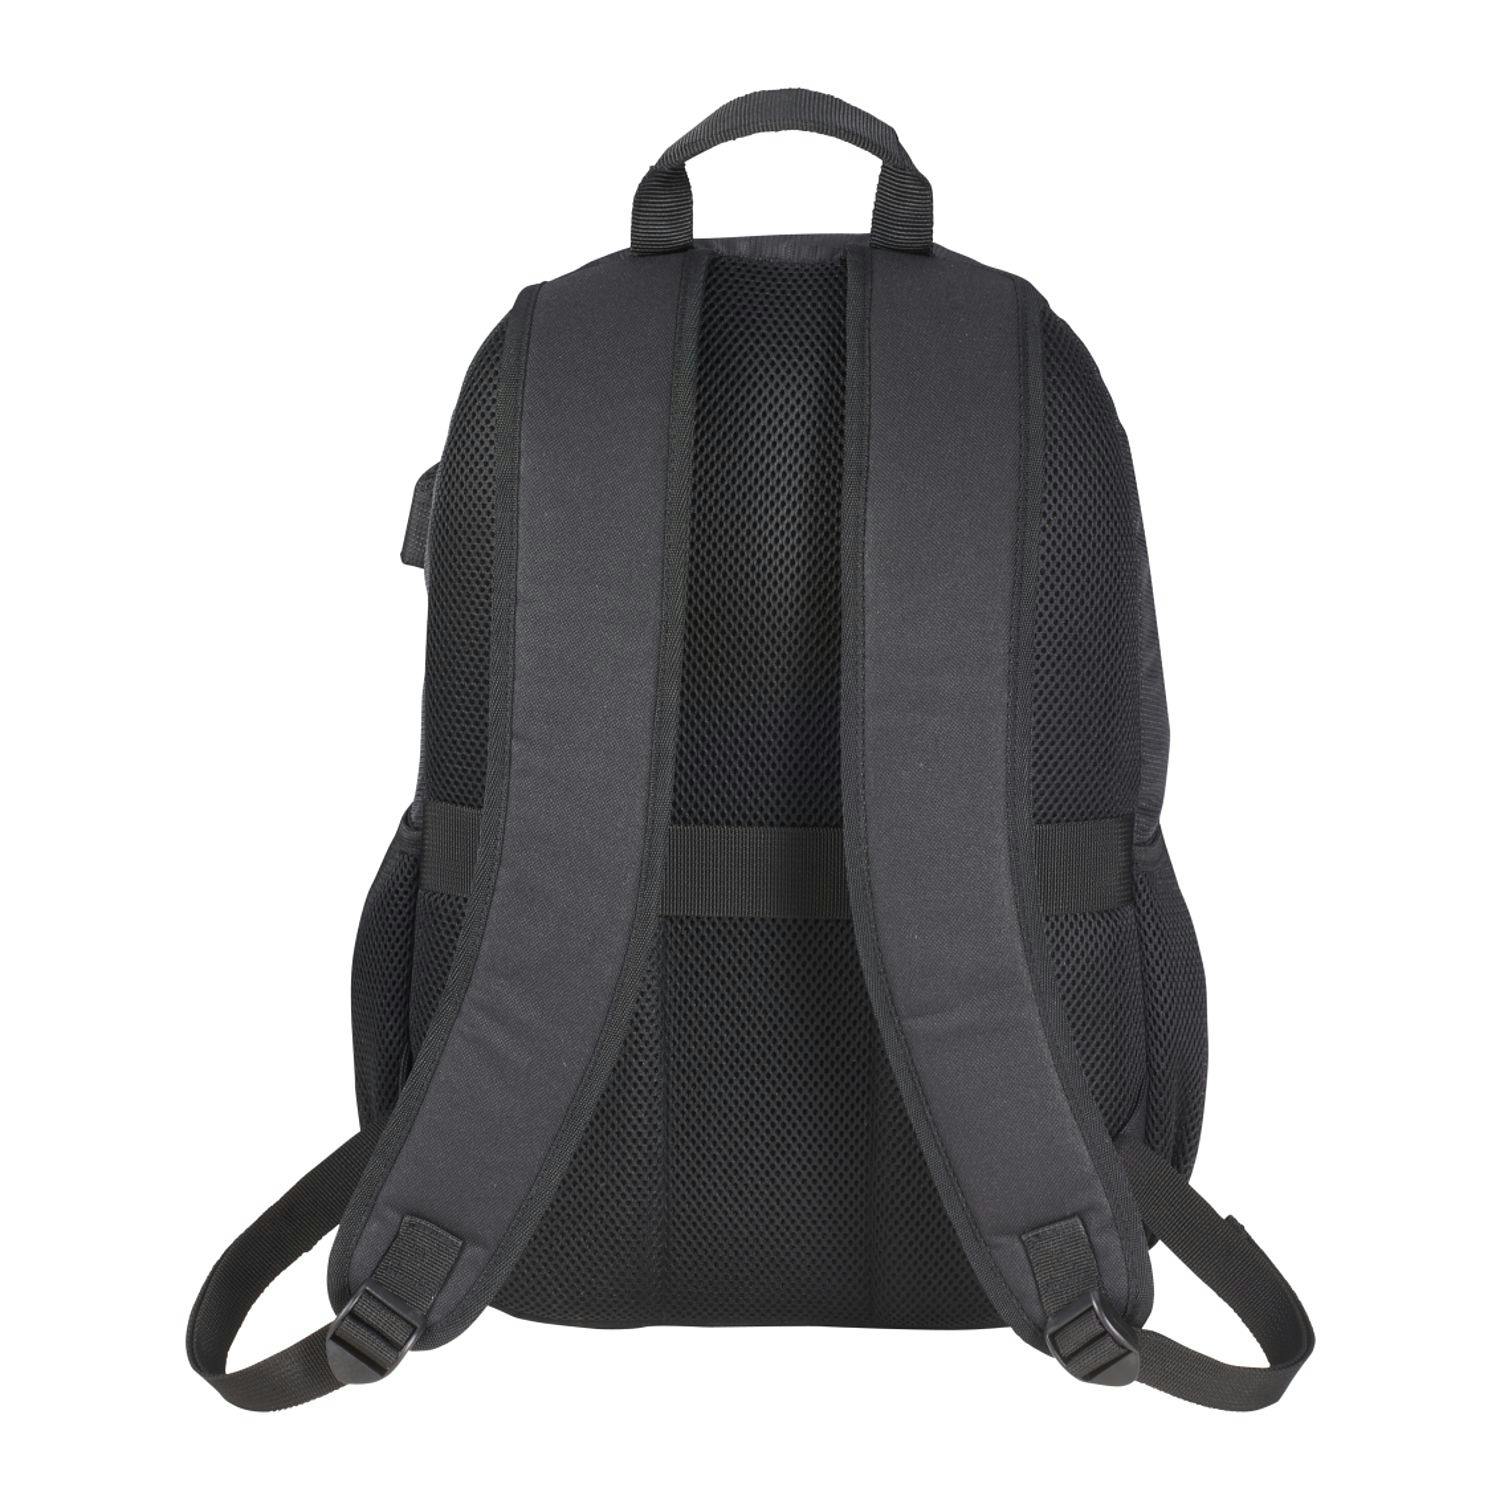 Tahoma 15" Computer Backpack - additional Image 2